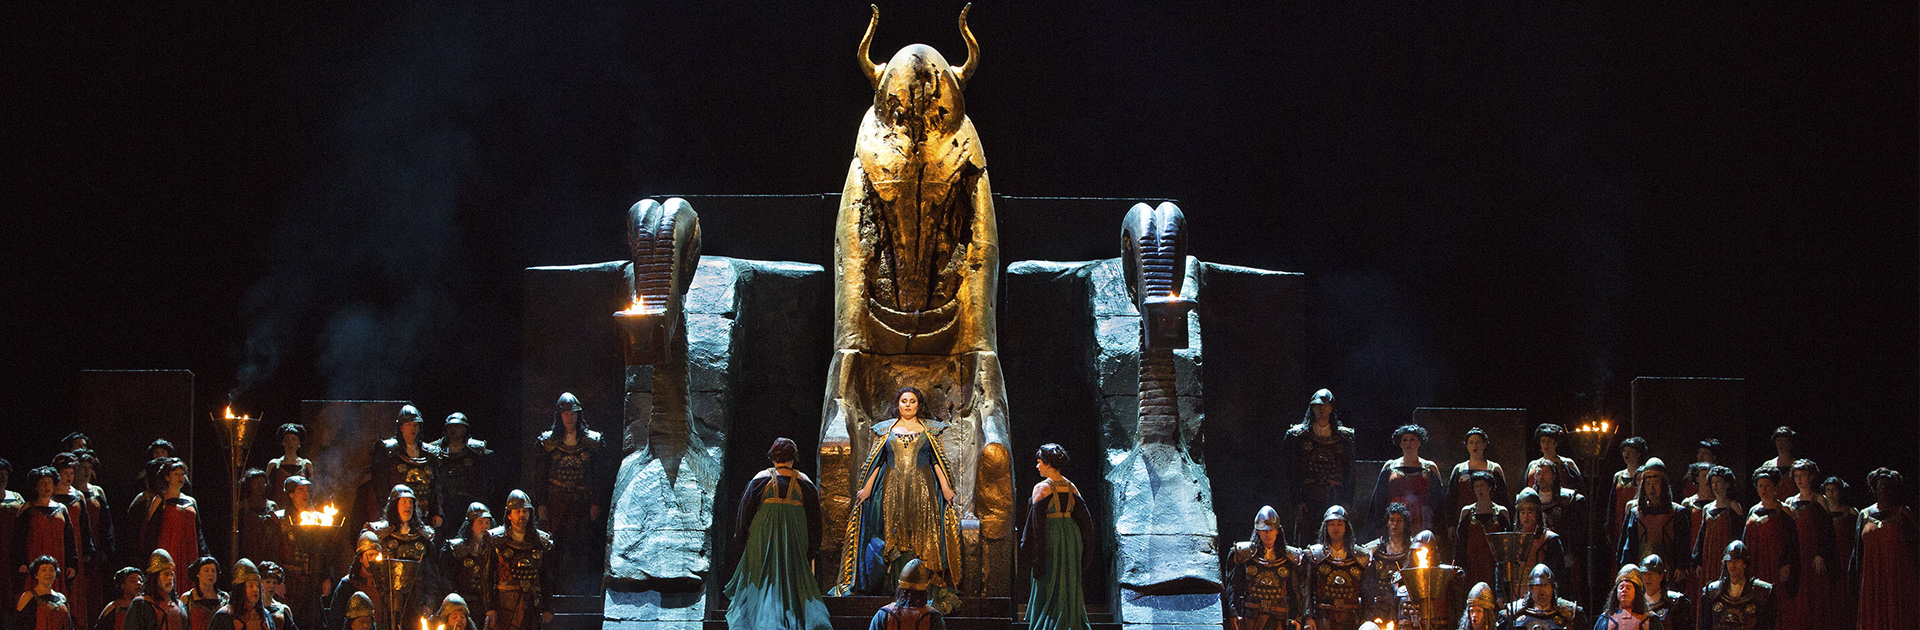 Nabucco. Ópera de Verdi